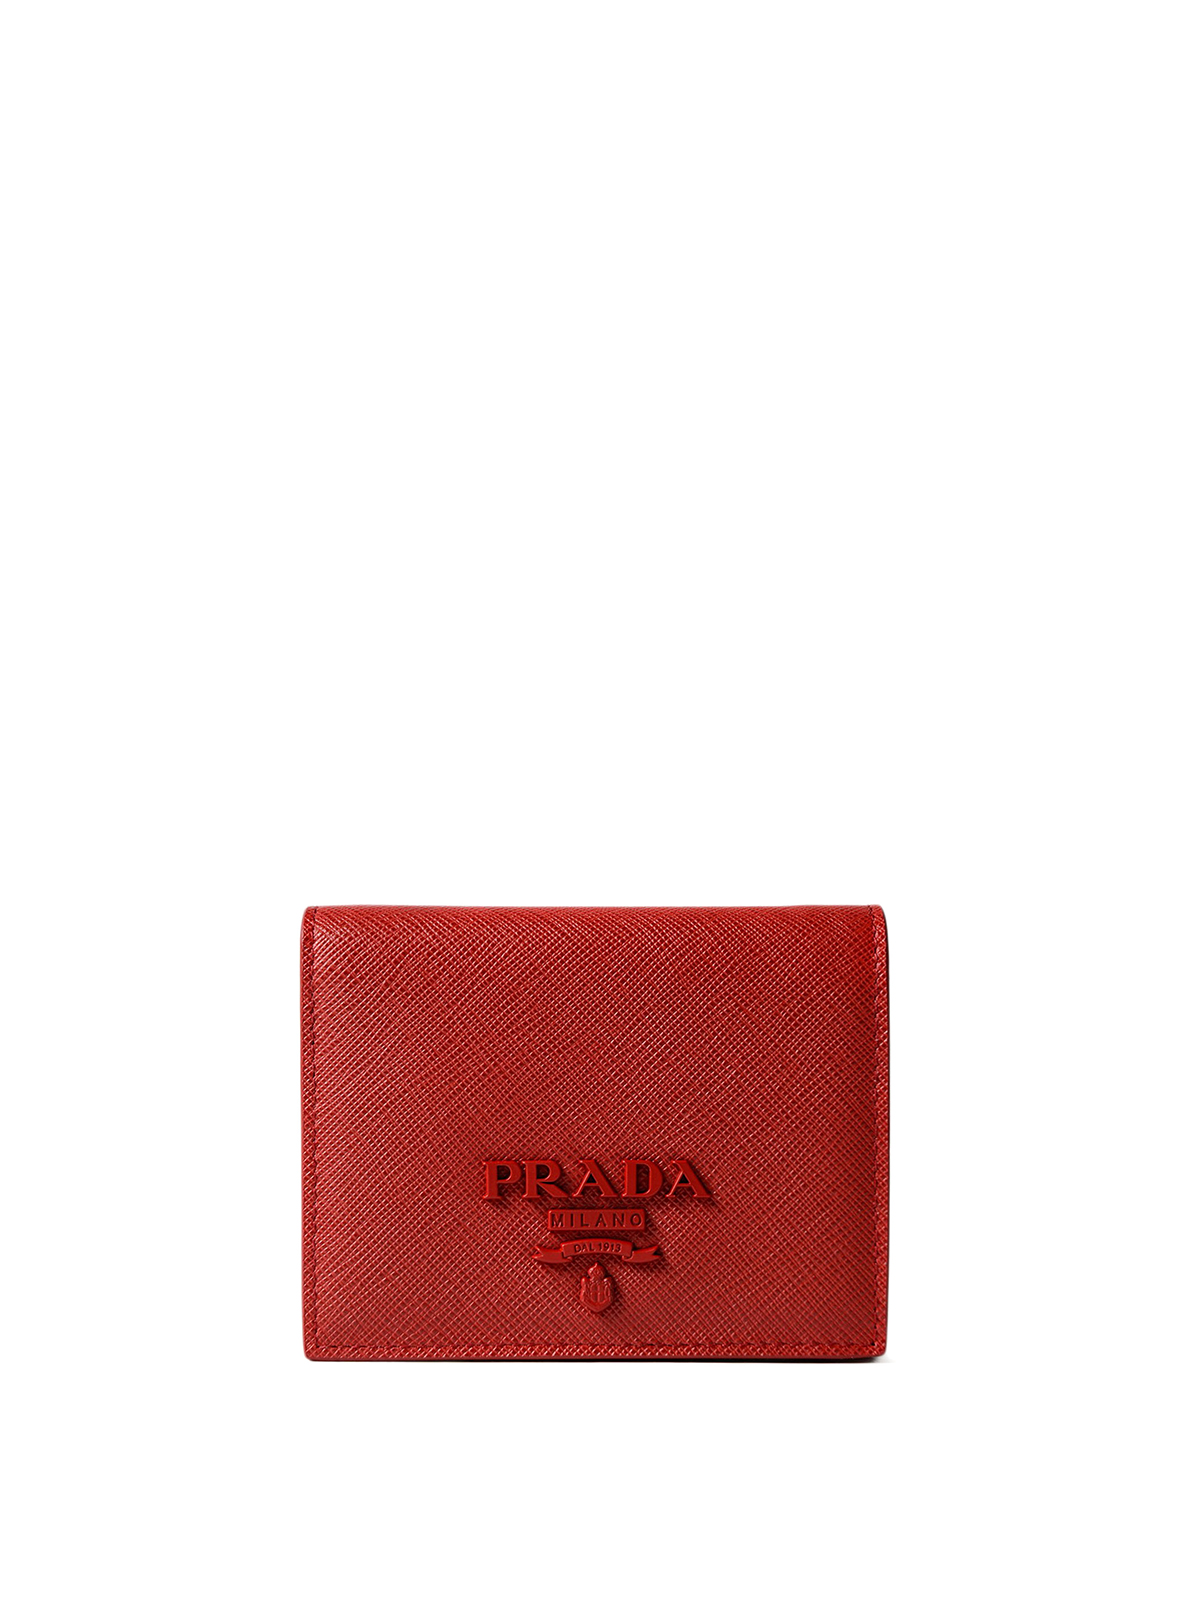 prada milano dal 1913 purse red